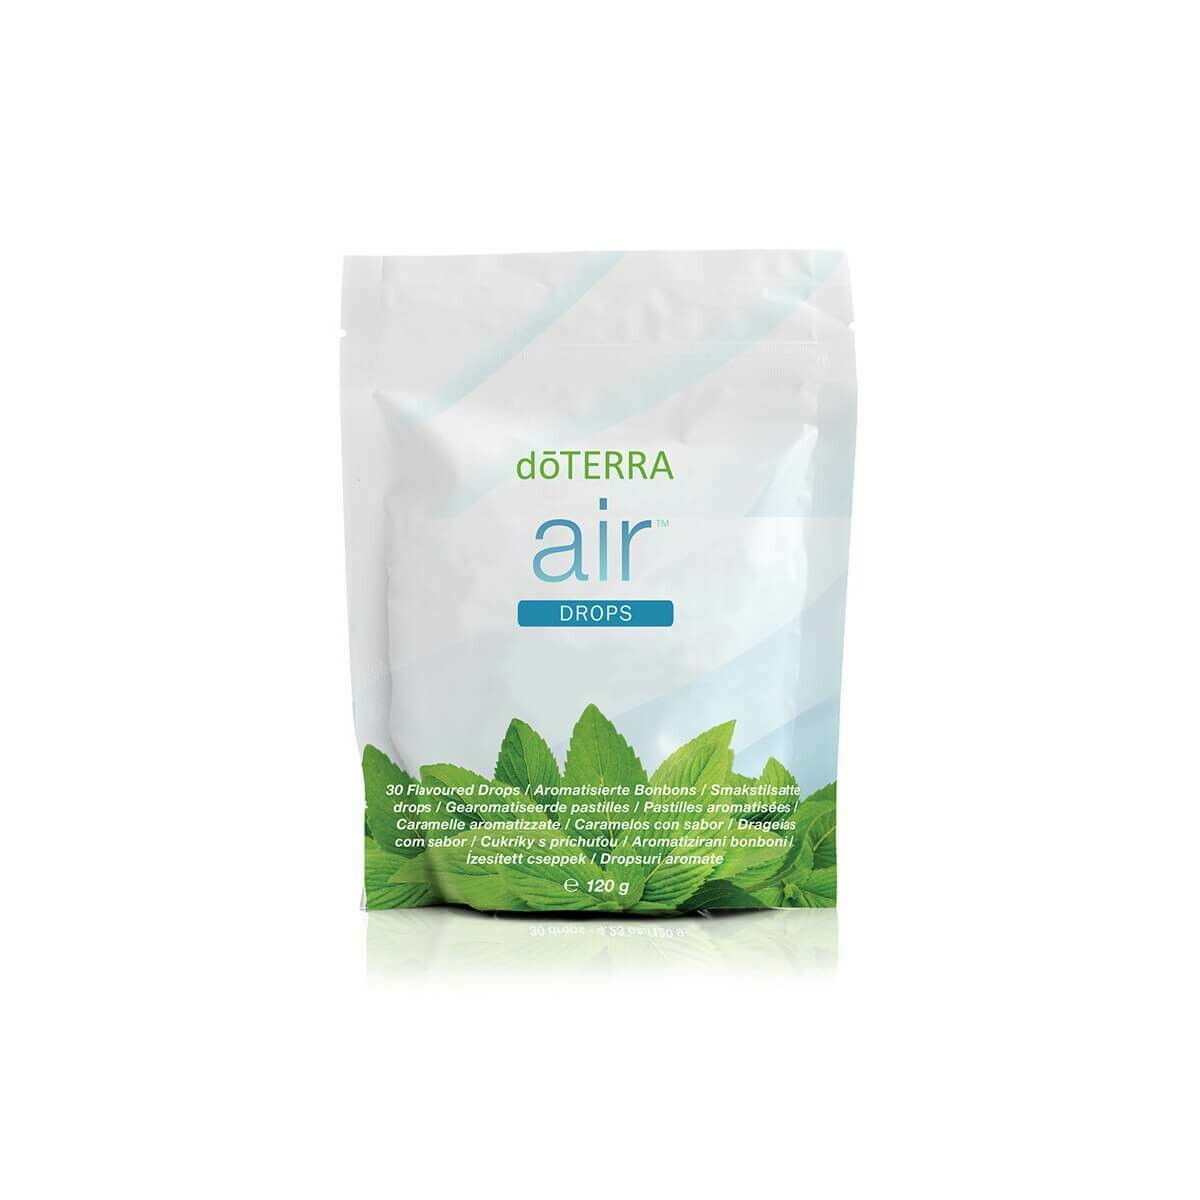 doTERRA Air Drops (Atemwege Bonbons) - 30 Stk.